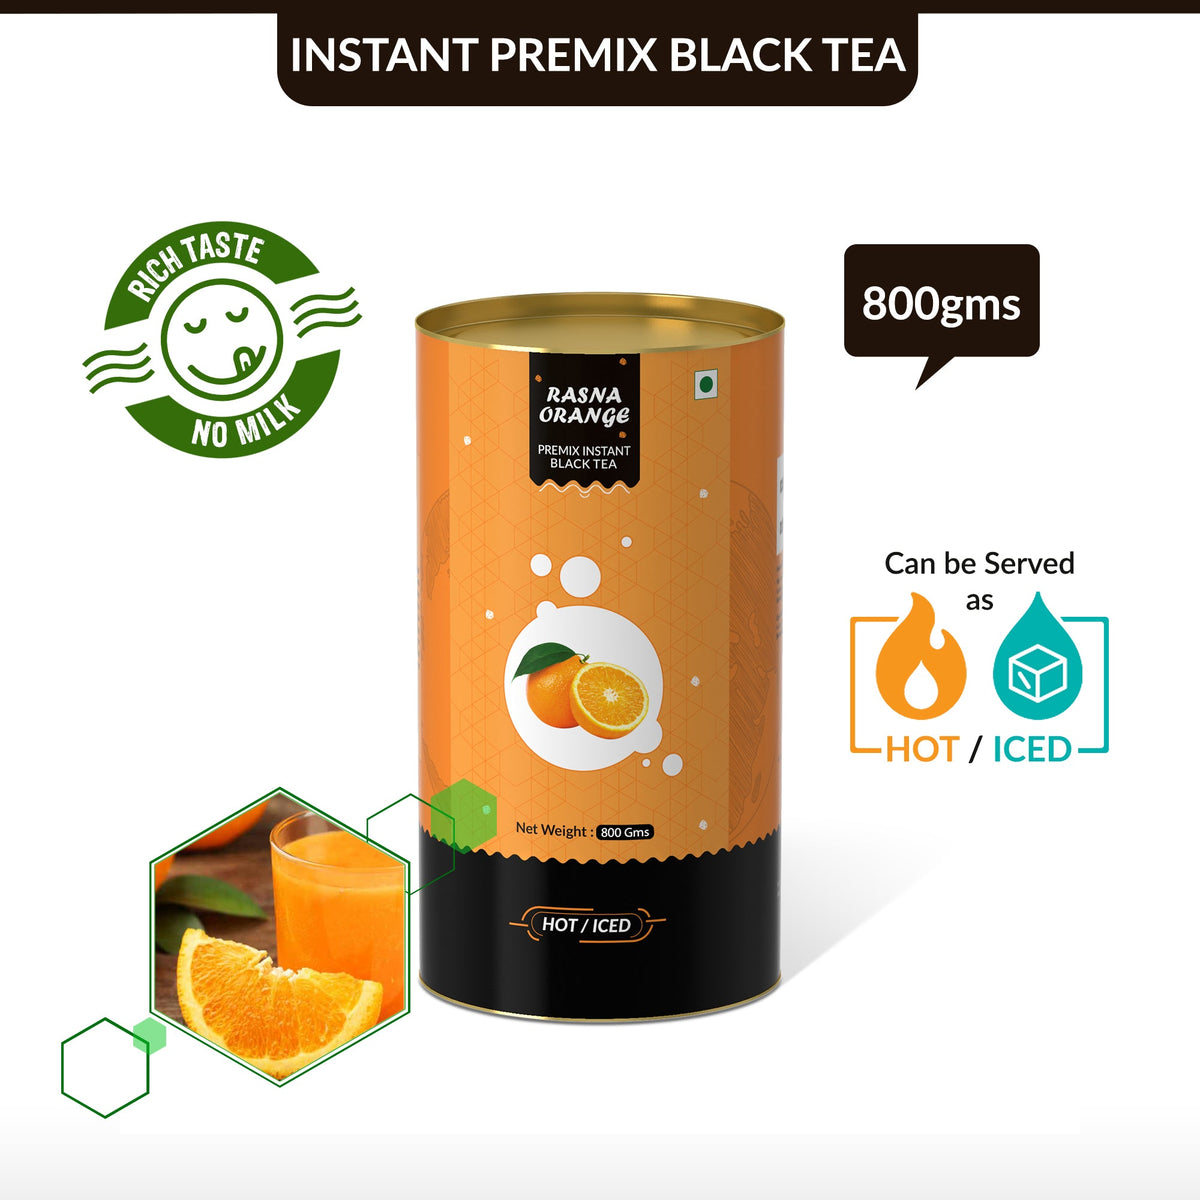 Rasna Orange Flavored Instant Black Tea